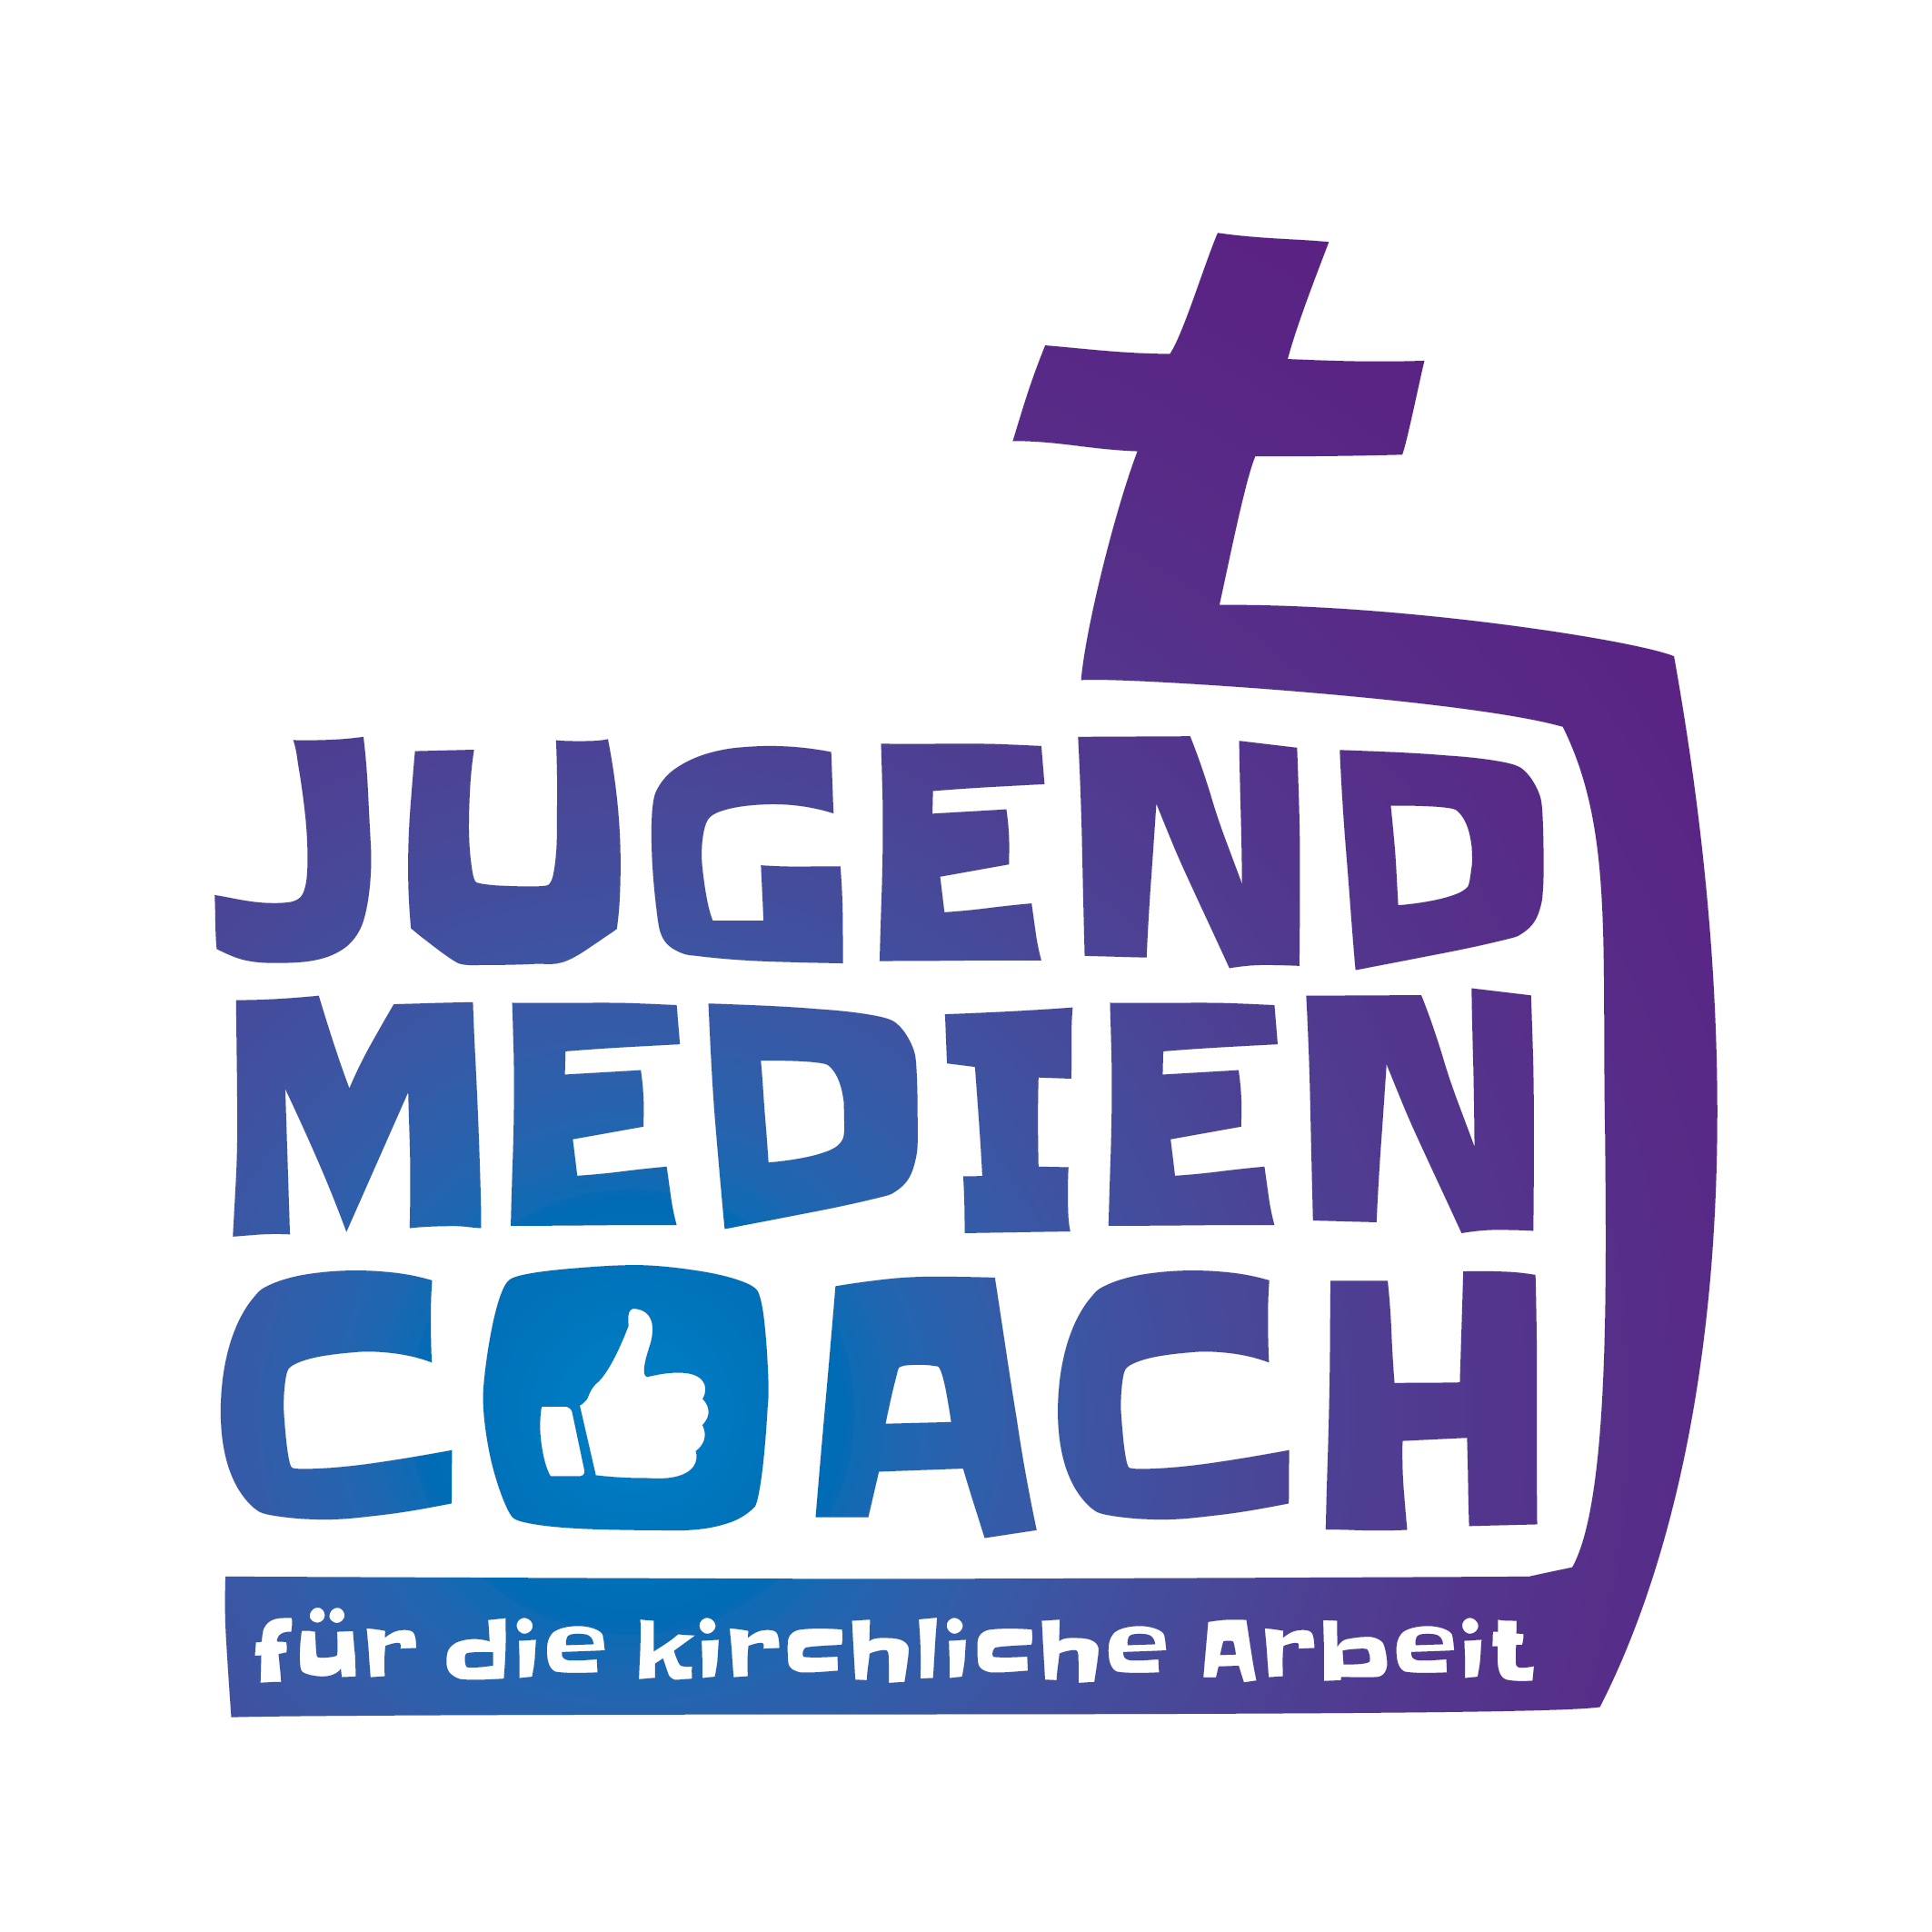 Jugendmediencoach logo 9cm bunt